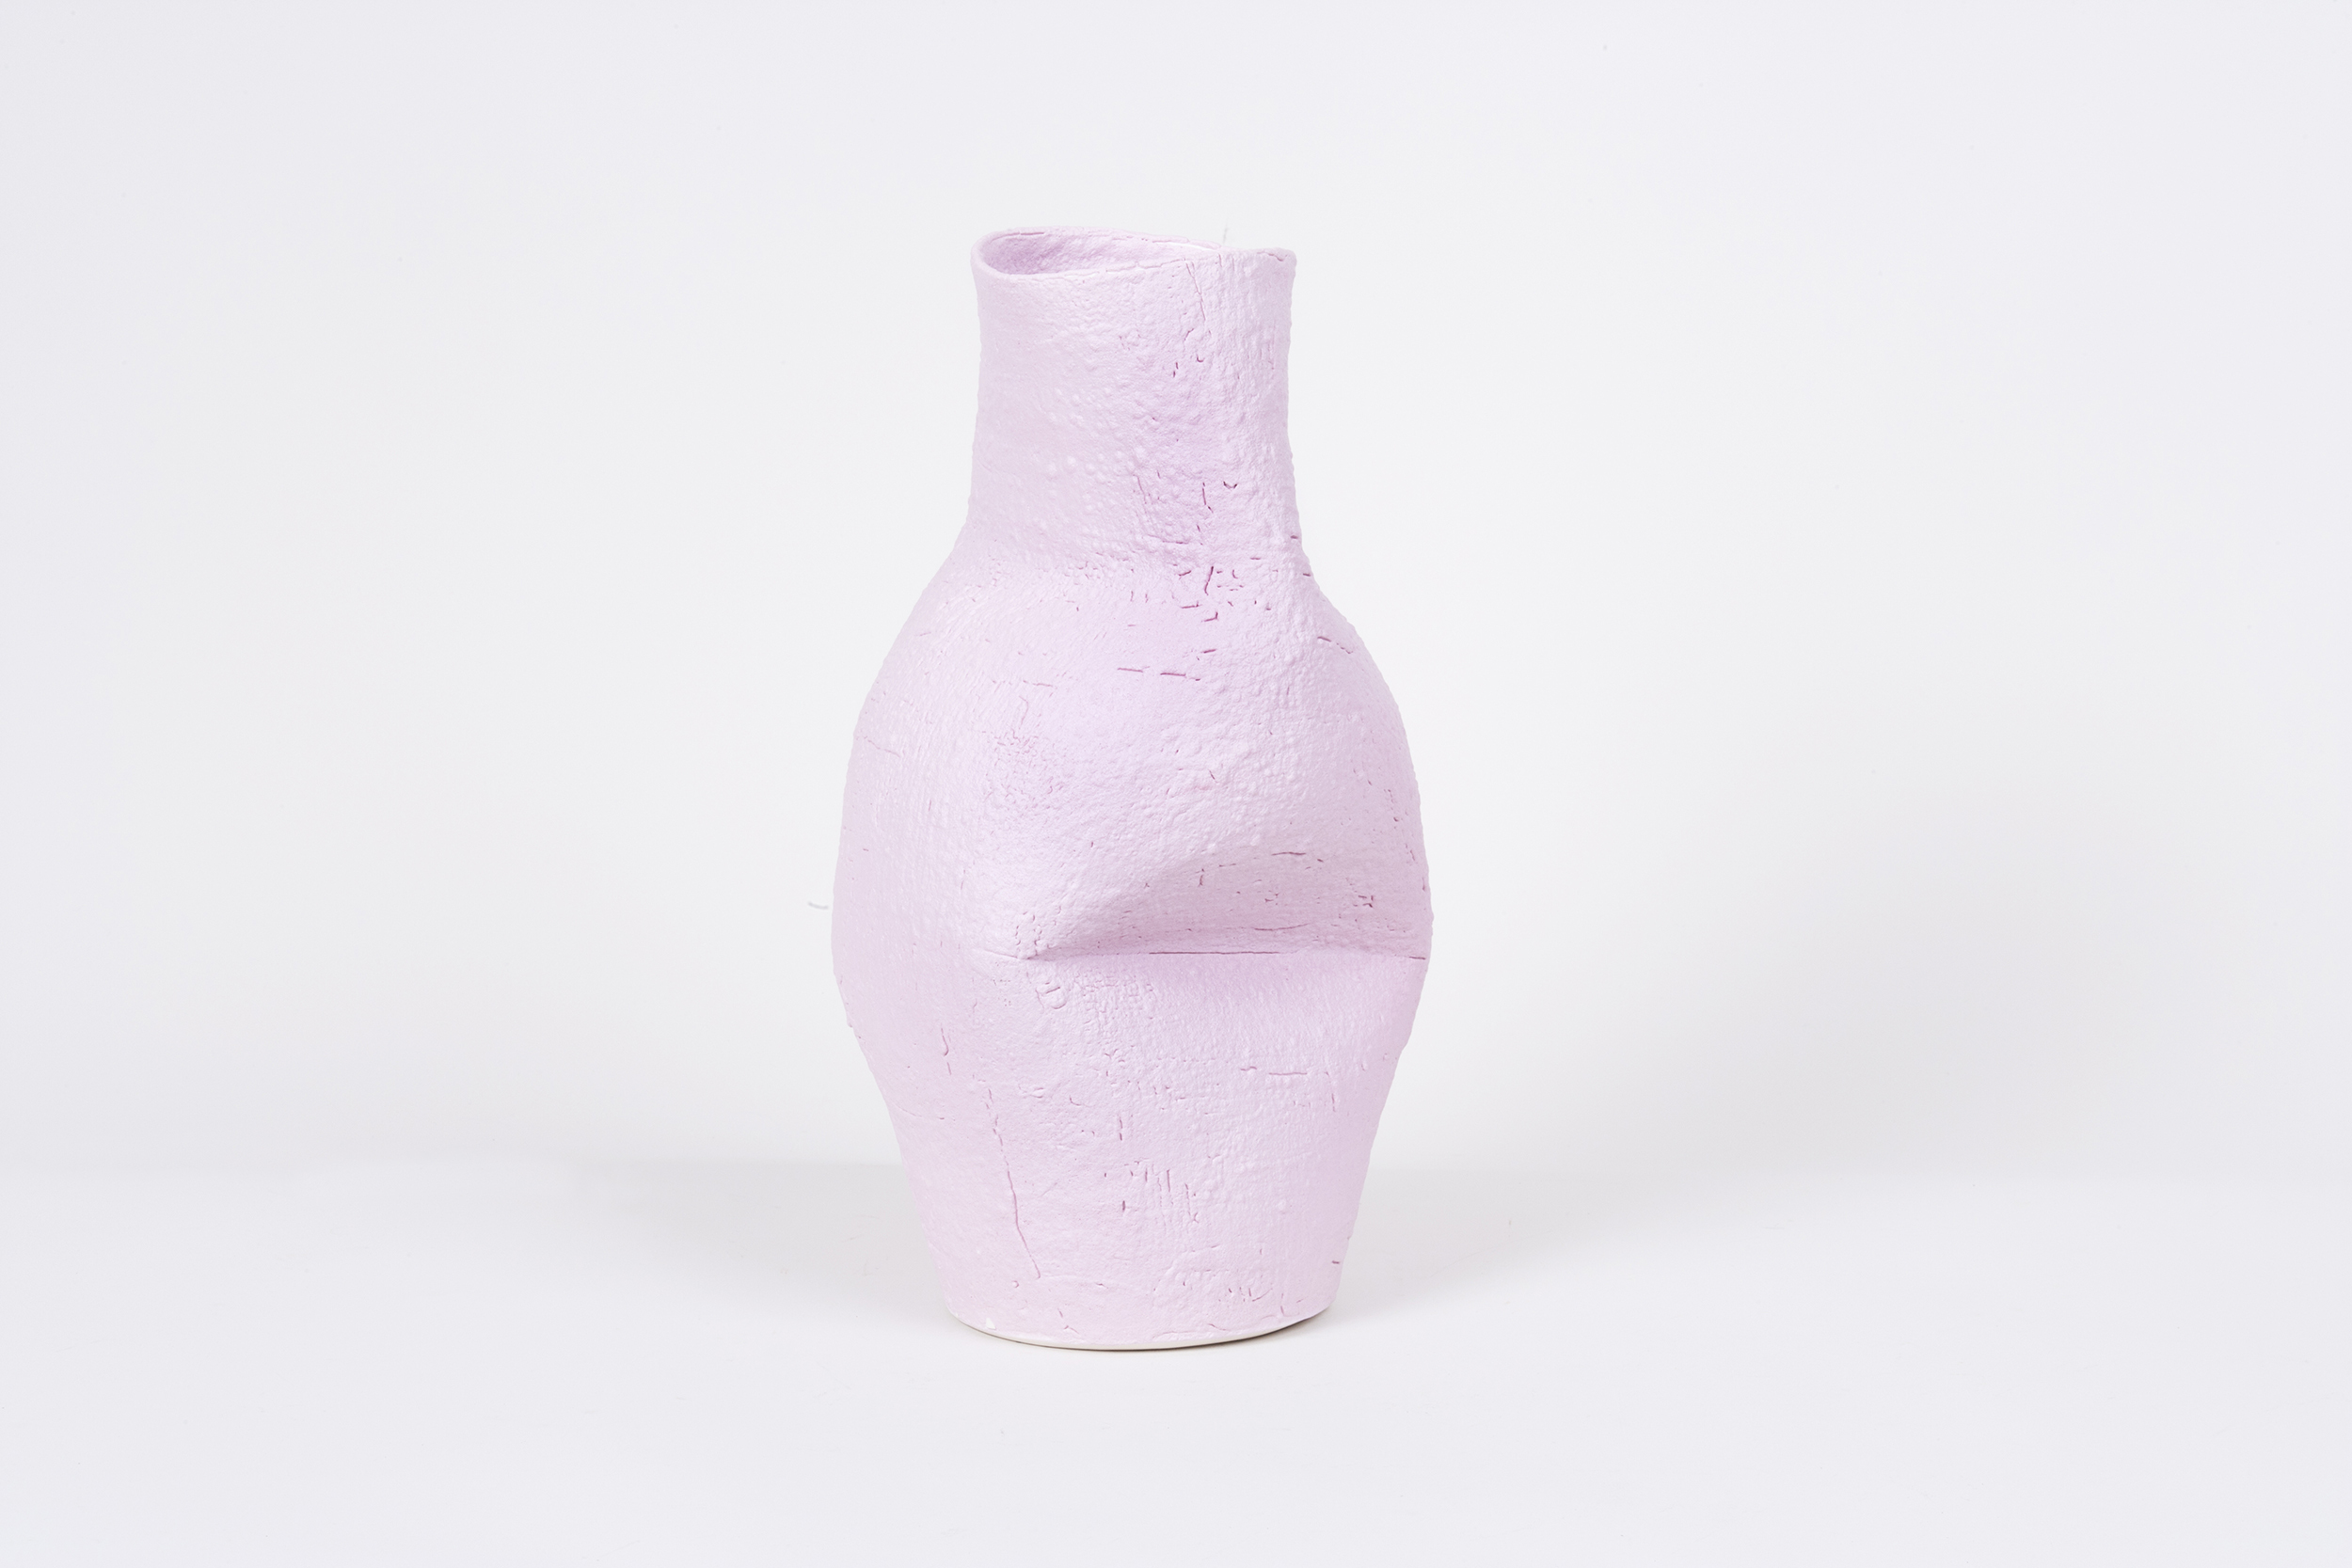 CG 117 Pink Vase 2015 site